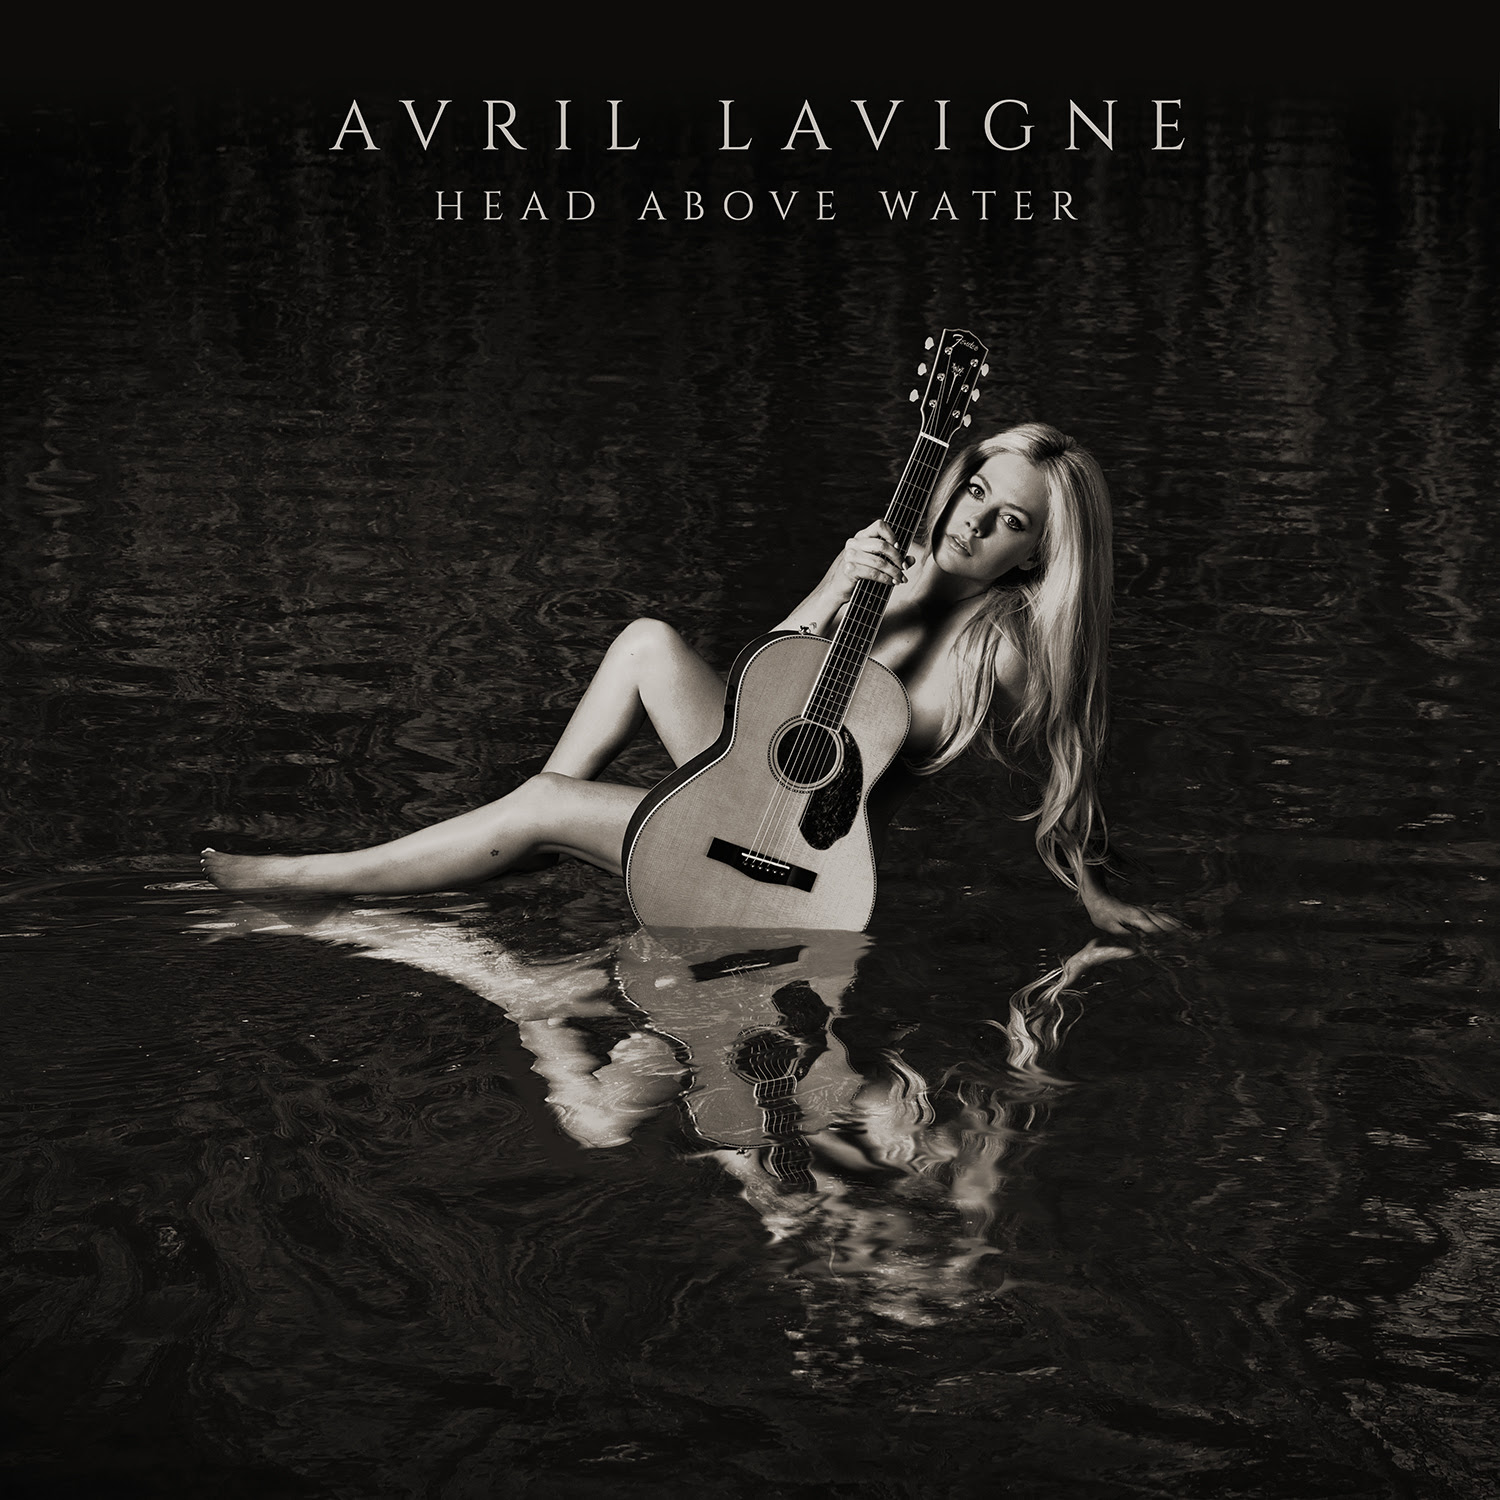 Avril Lavigne album and tour - Images